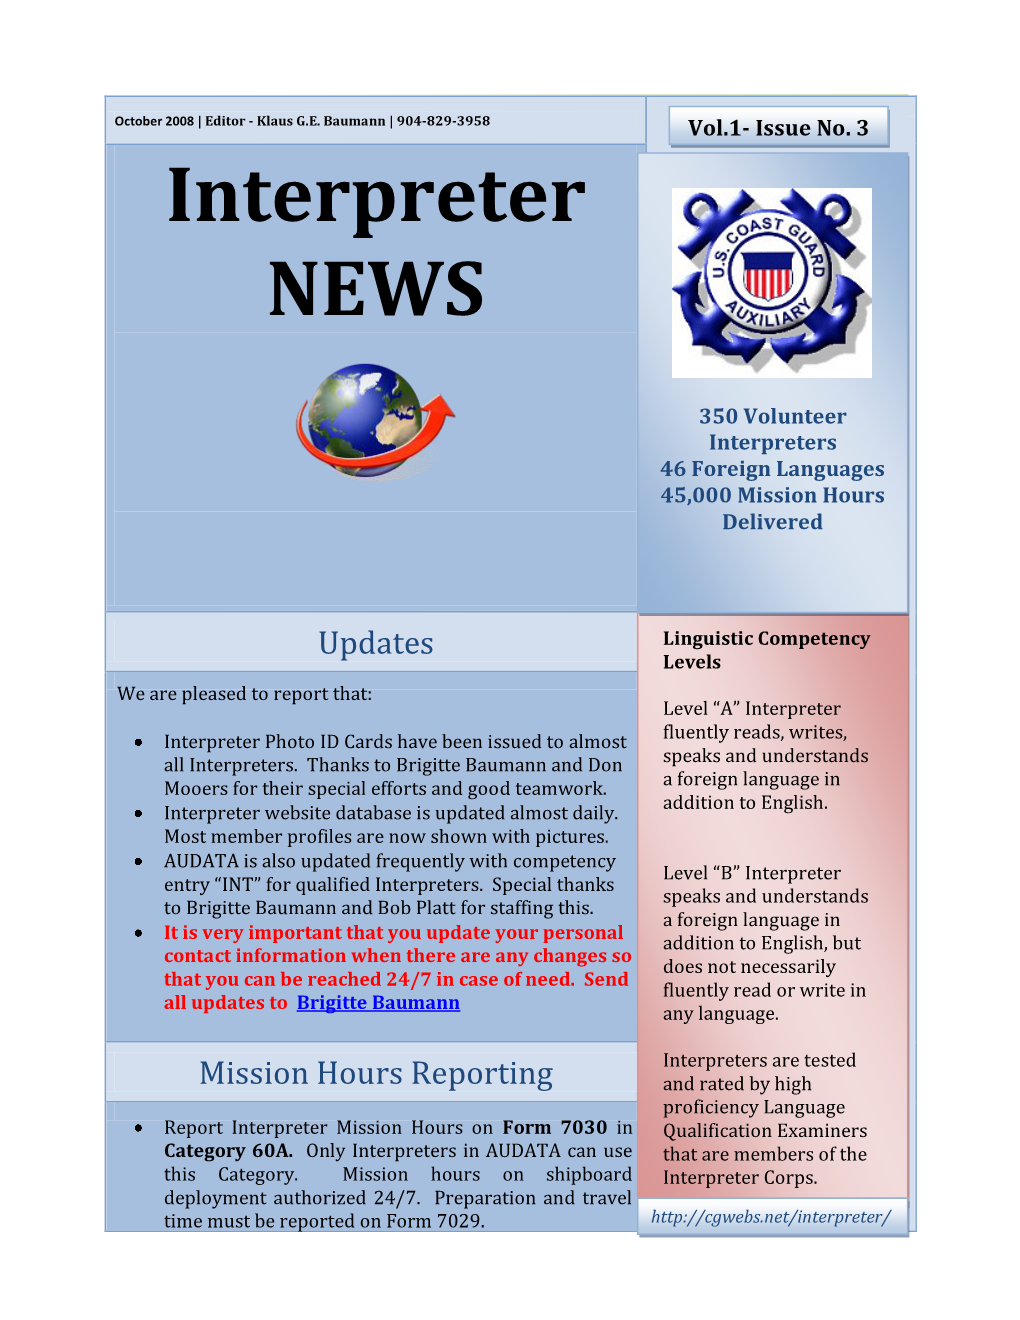 Interpreter NEWS